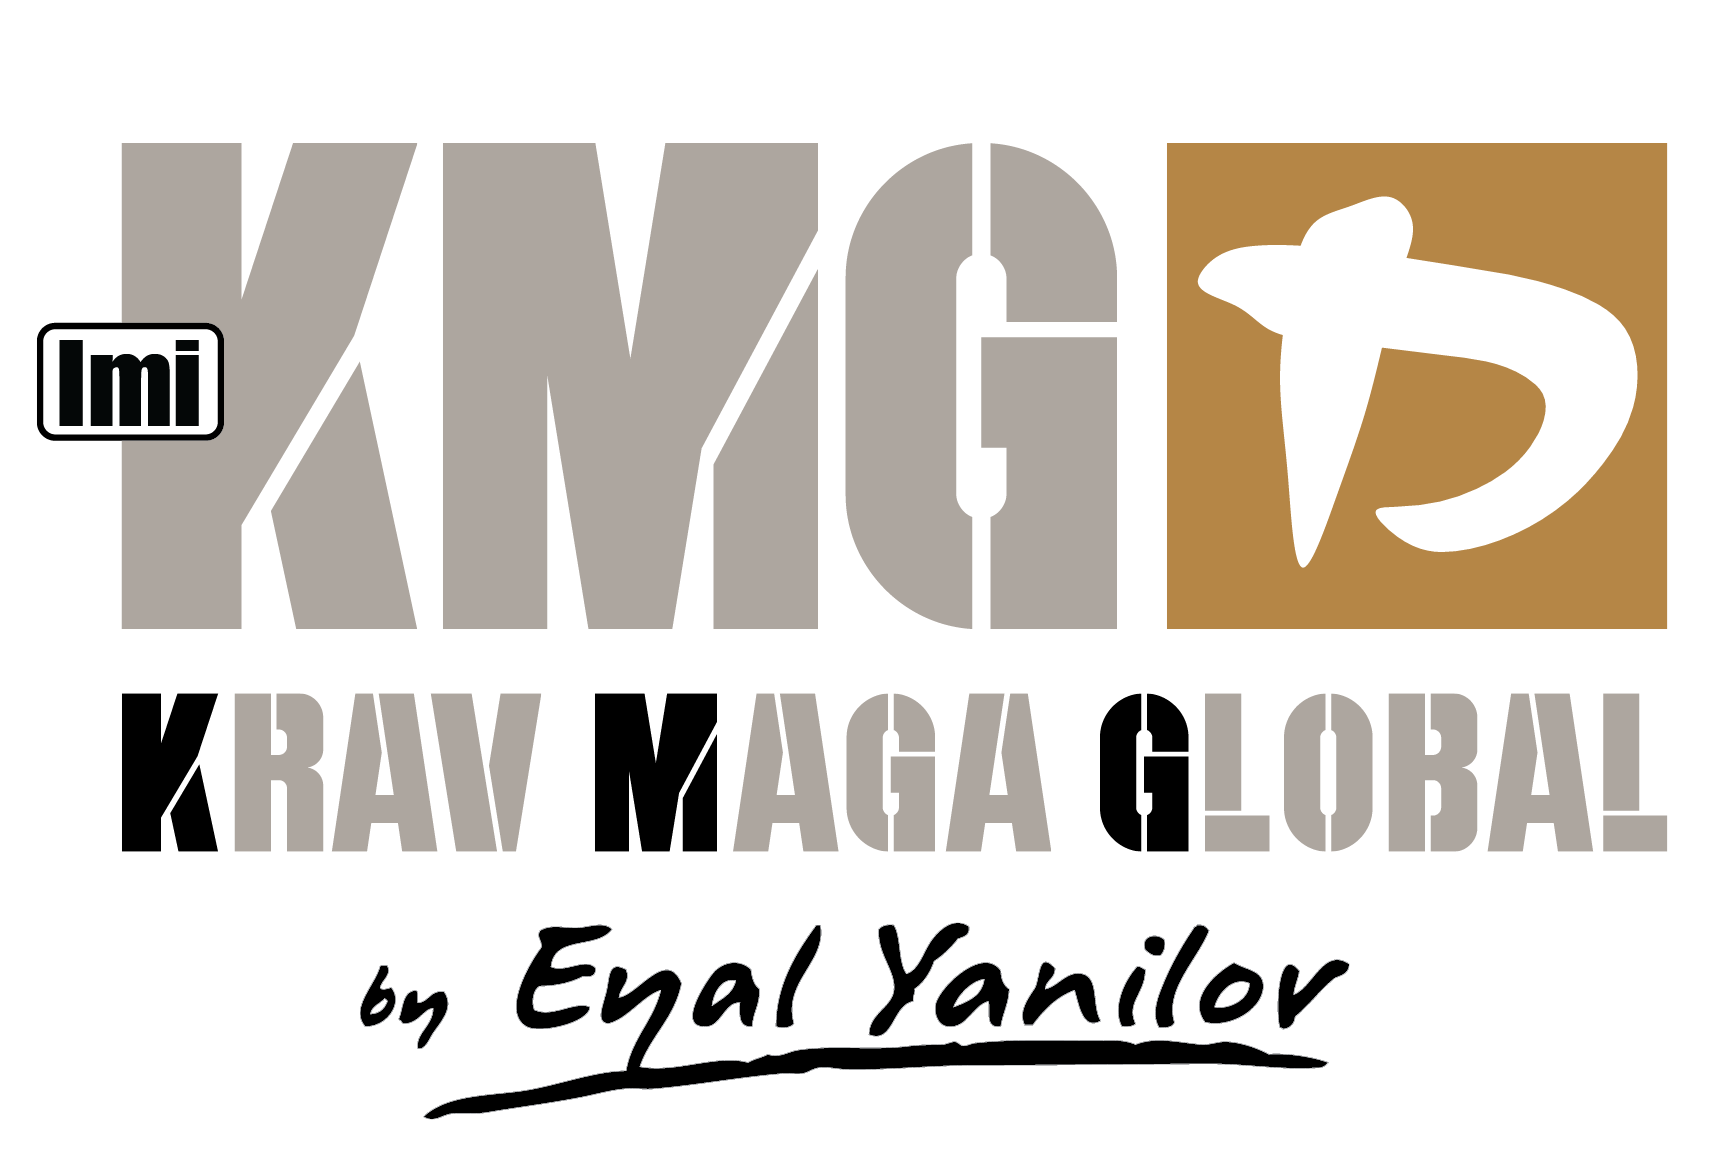 KMG Logo - Kmg Logos